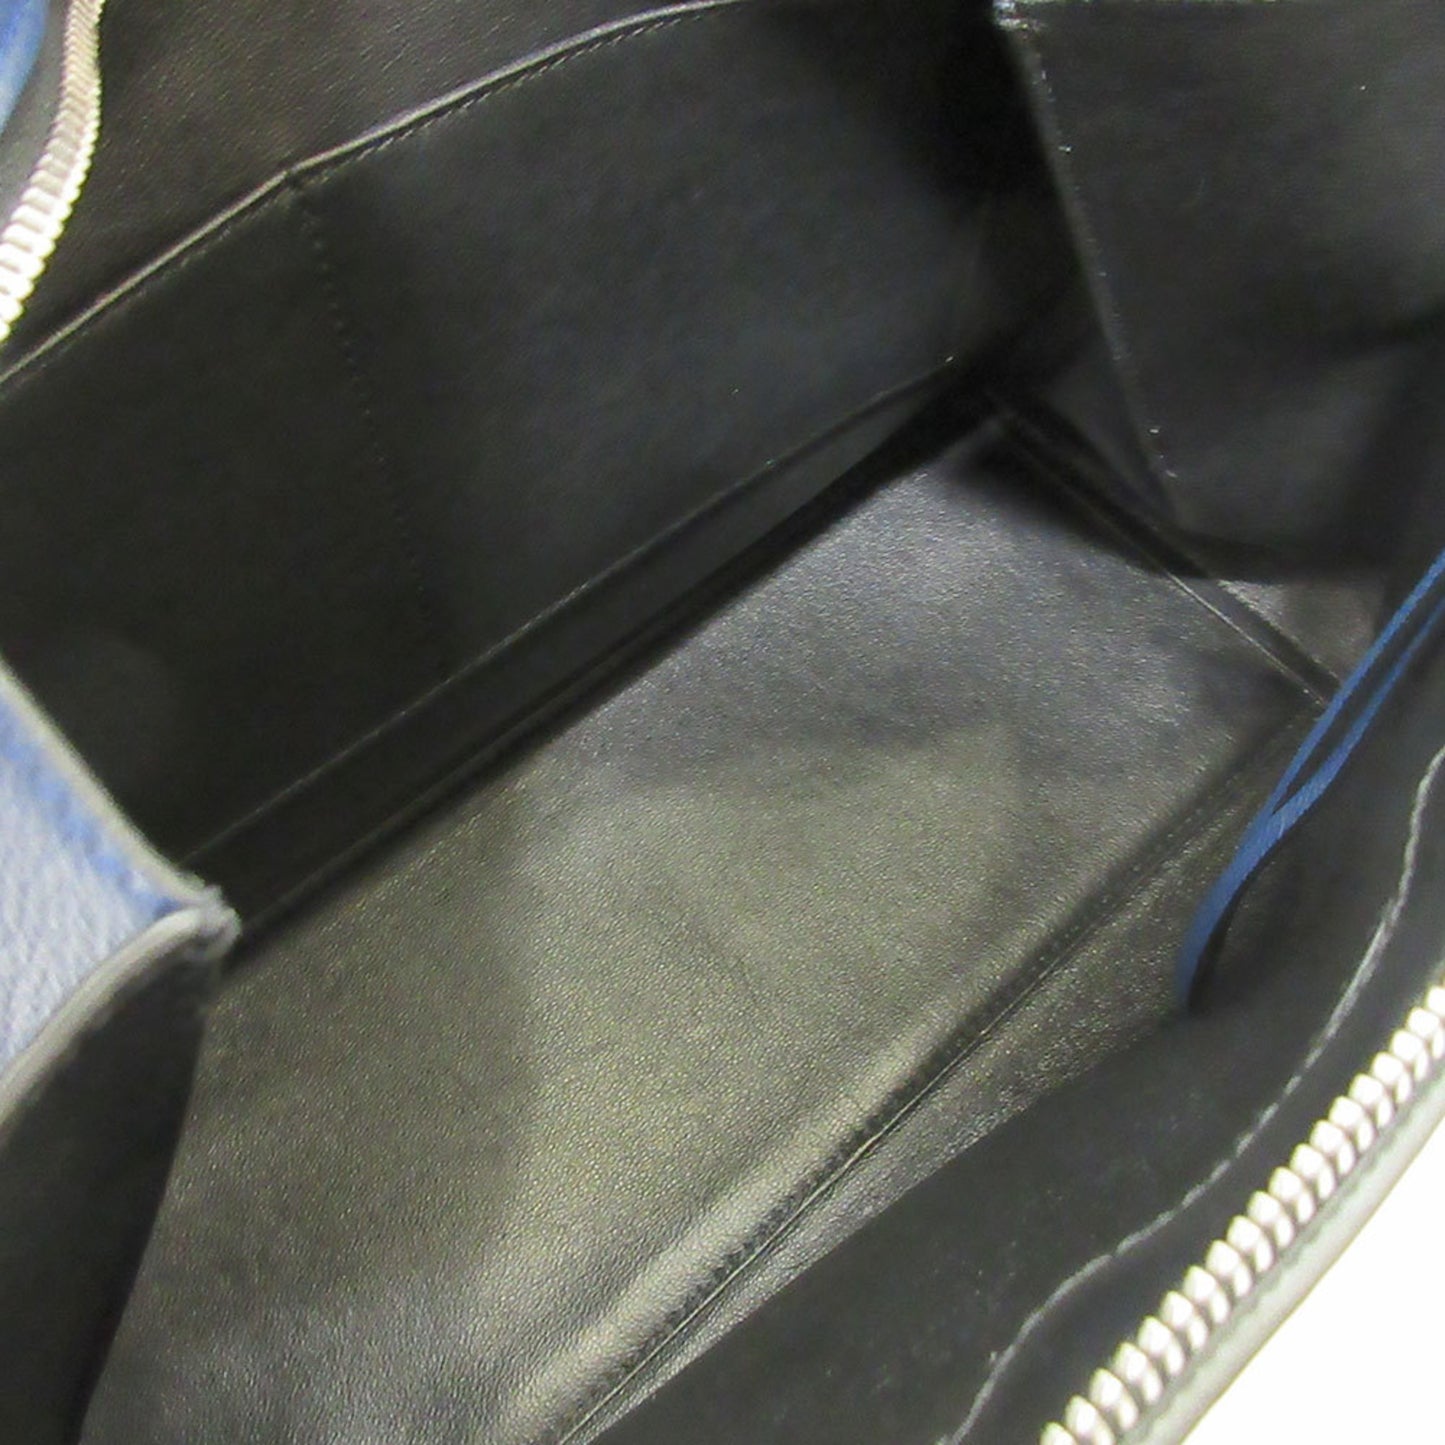 Celine Women's Navy Leather Celine Cabas Handbag in Navy